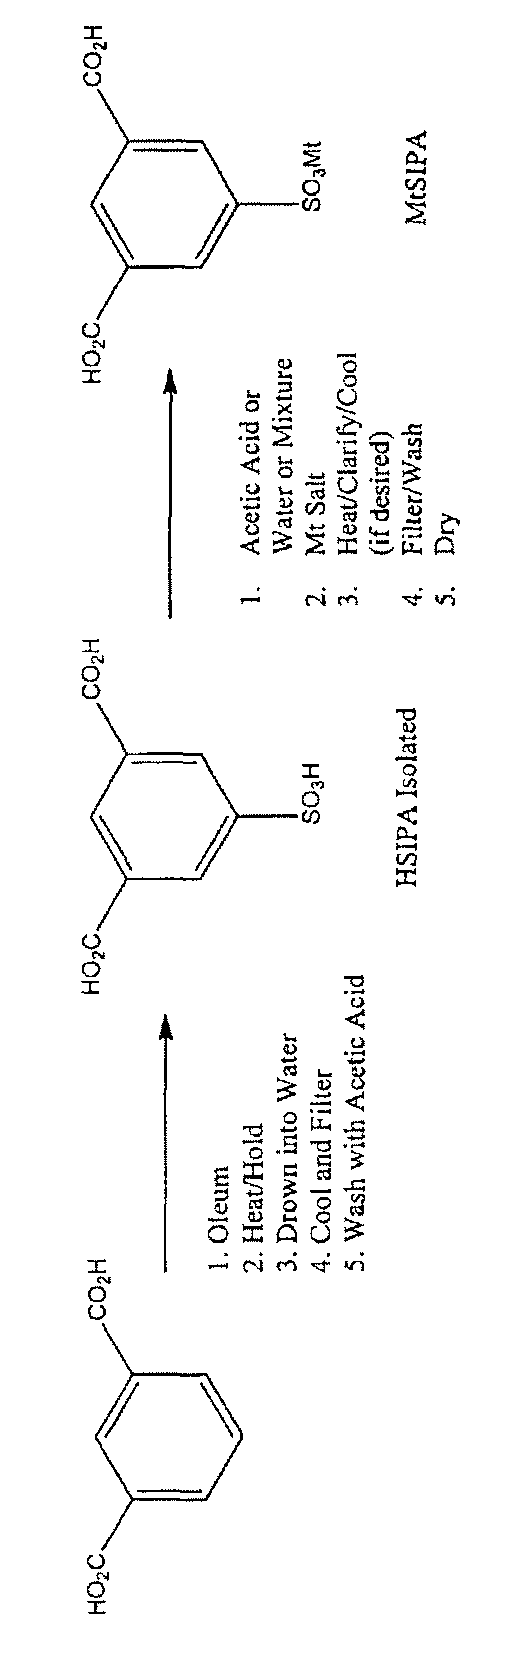 Salts of 5-sulfoisophthalic acid and method of making same